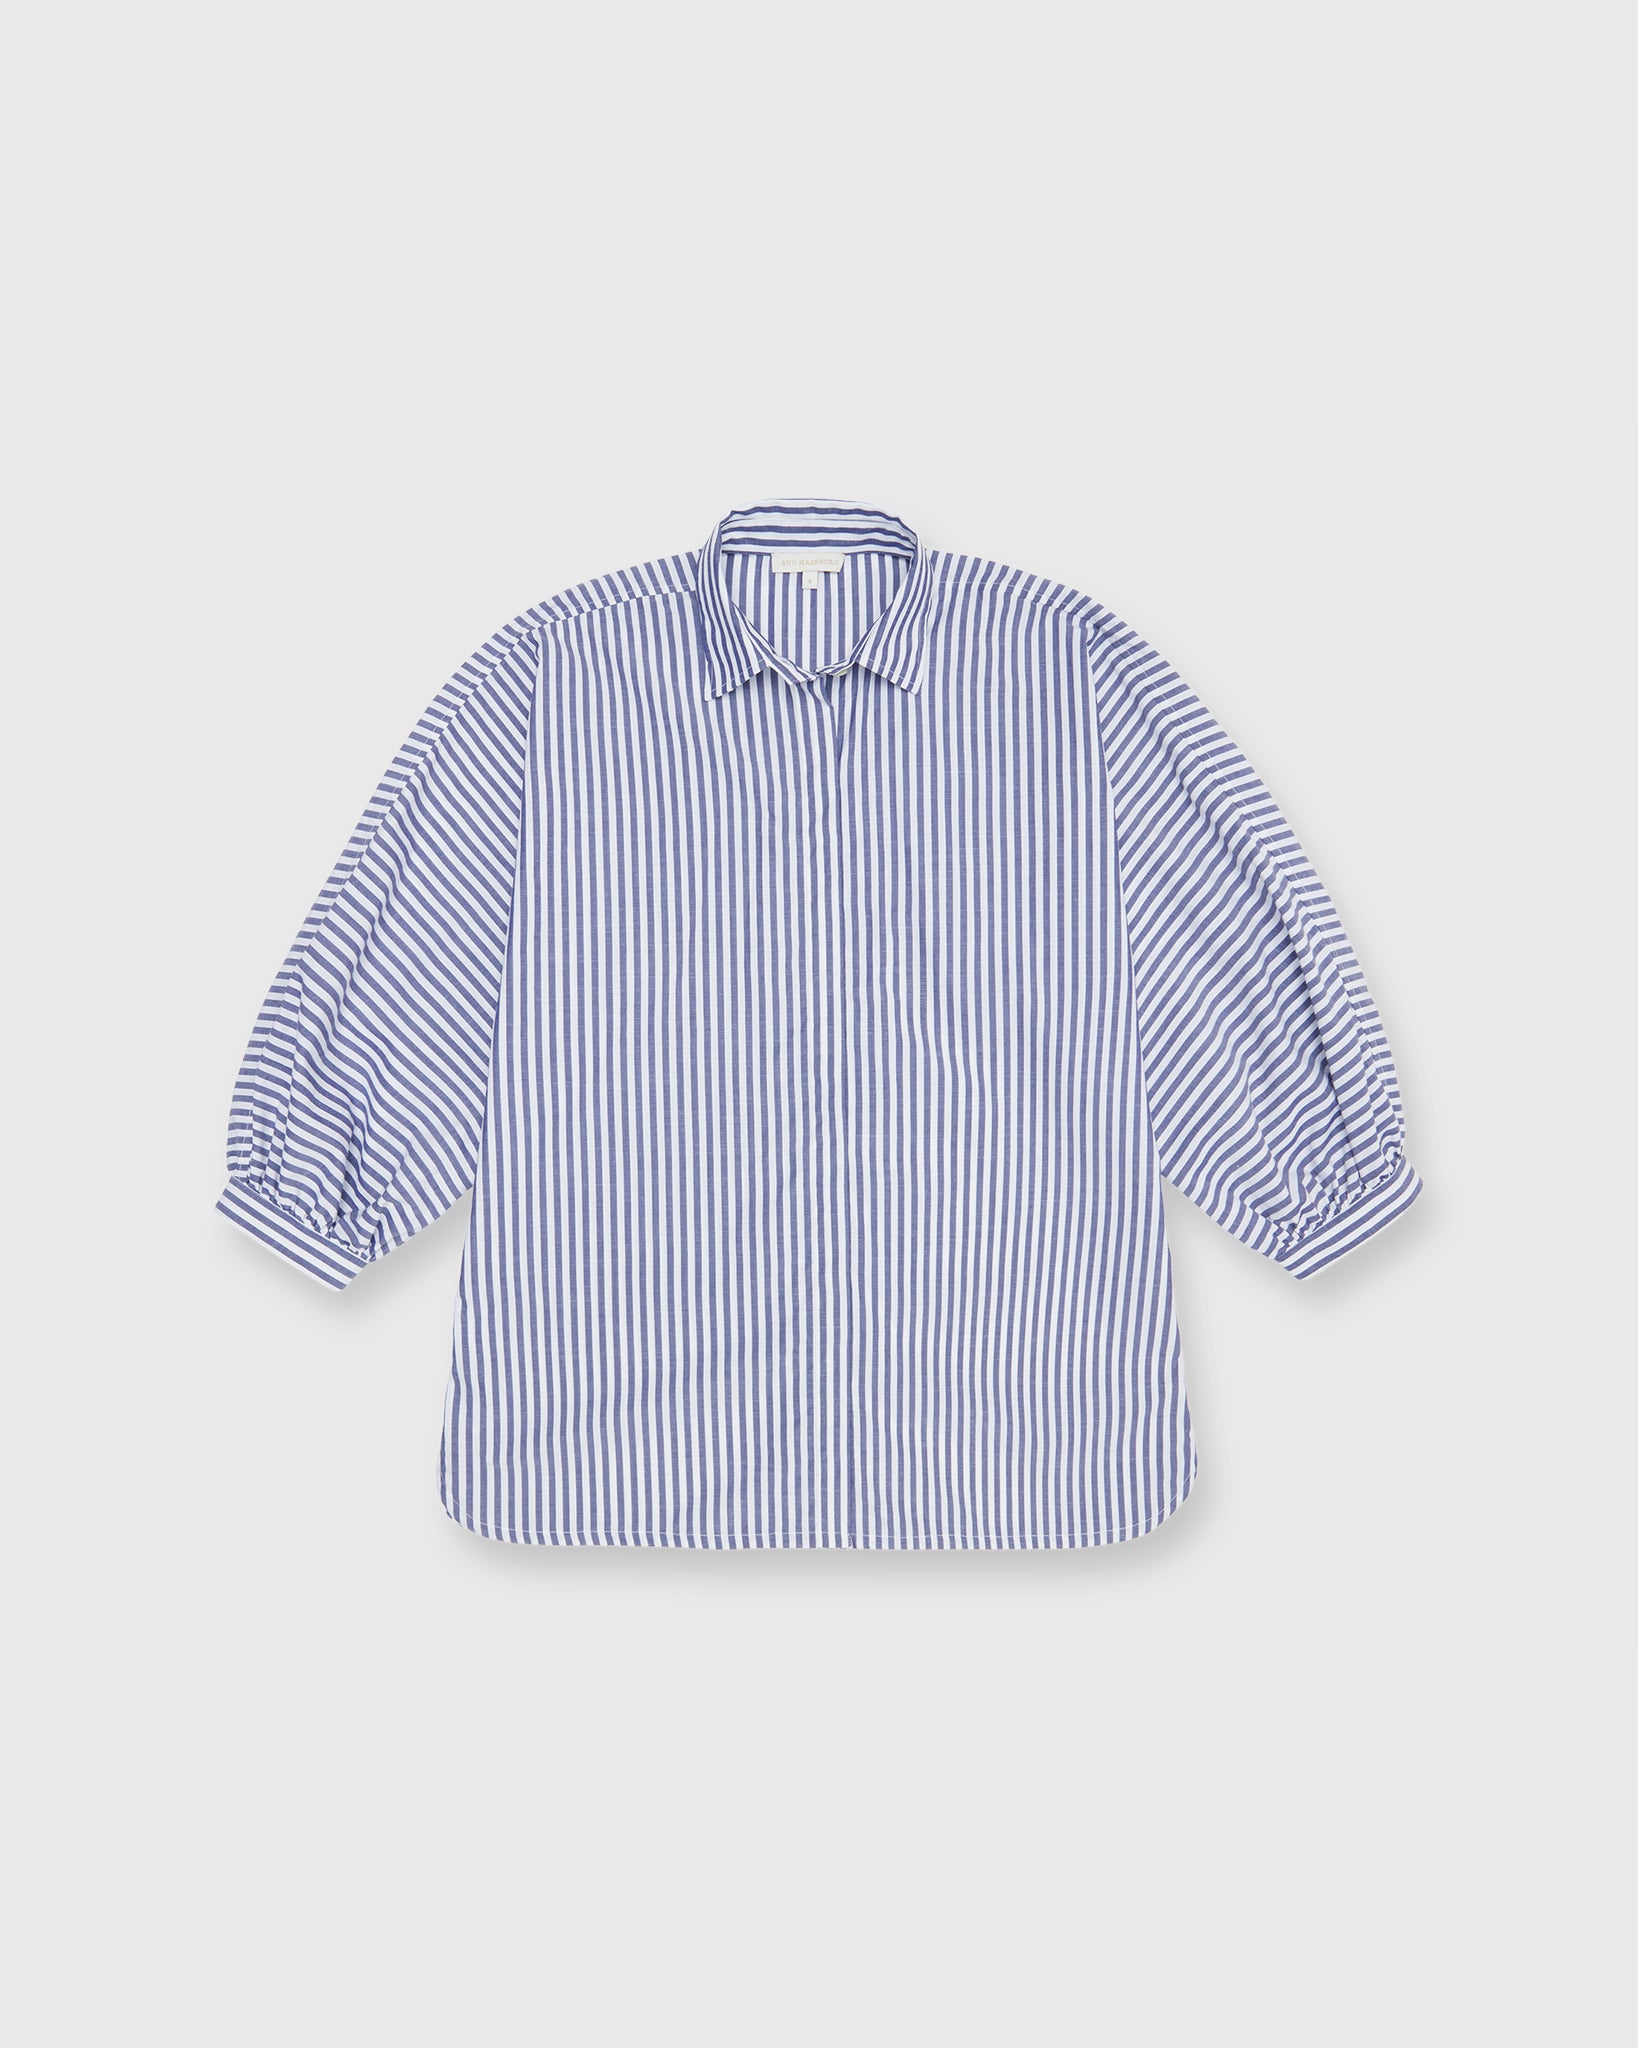 Volume Kimono Shirt in Blue/White Stripe Chambray